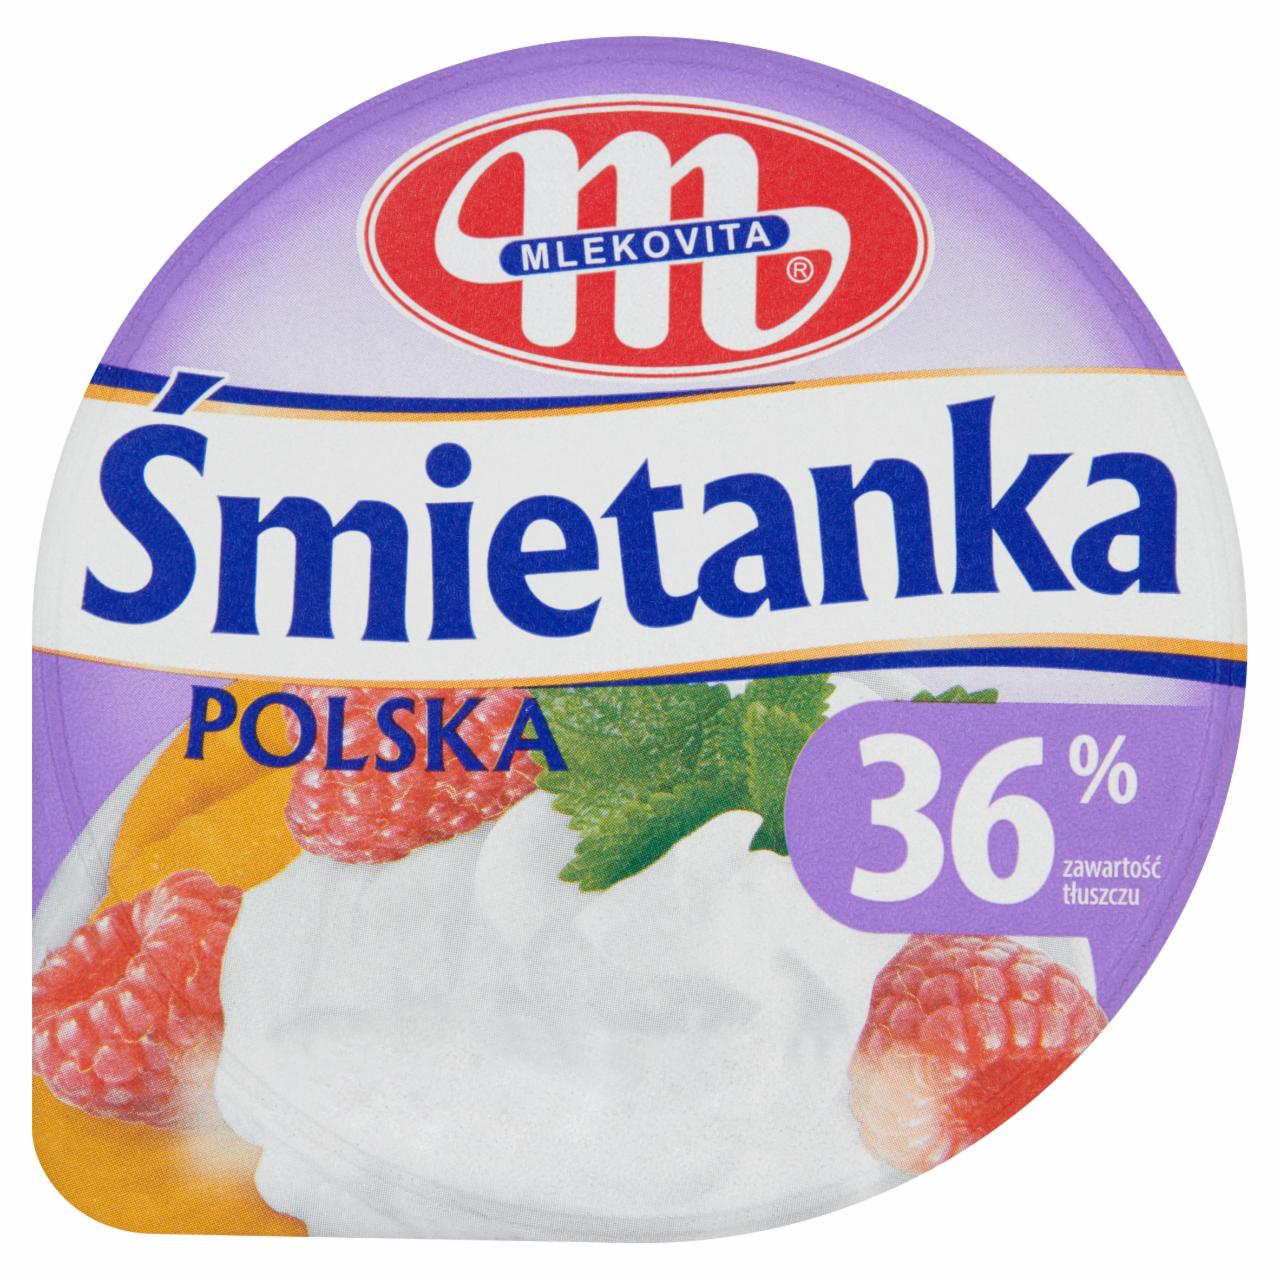 Zdjęcia - Mlekovita Śmietanka Polska 36% 200 ml